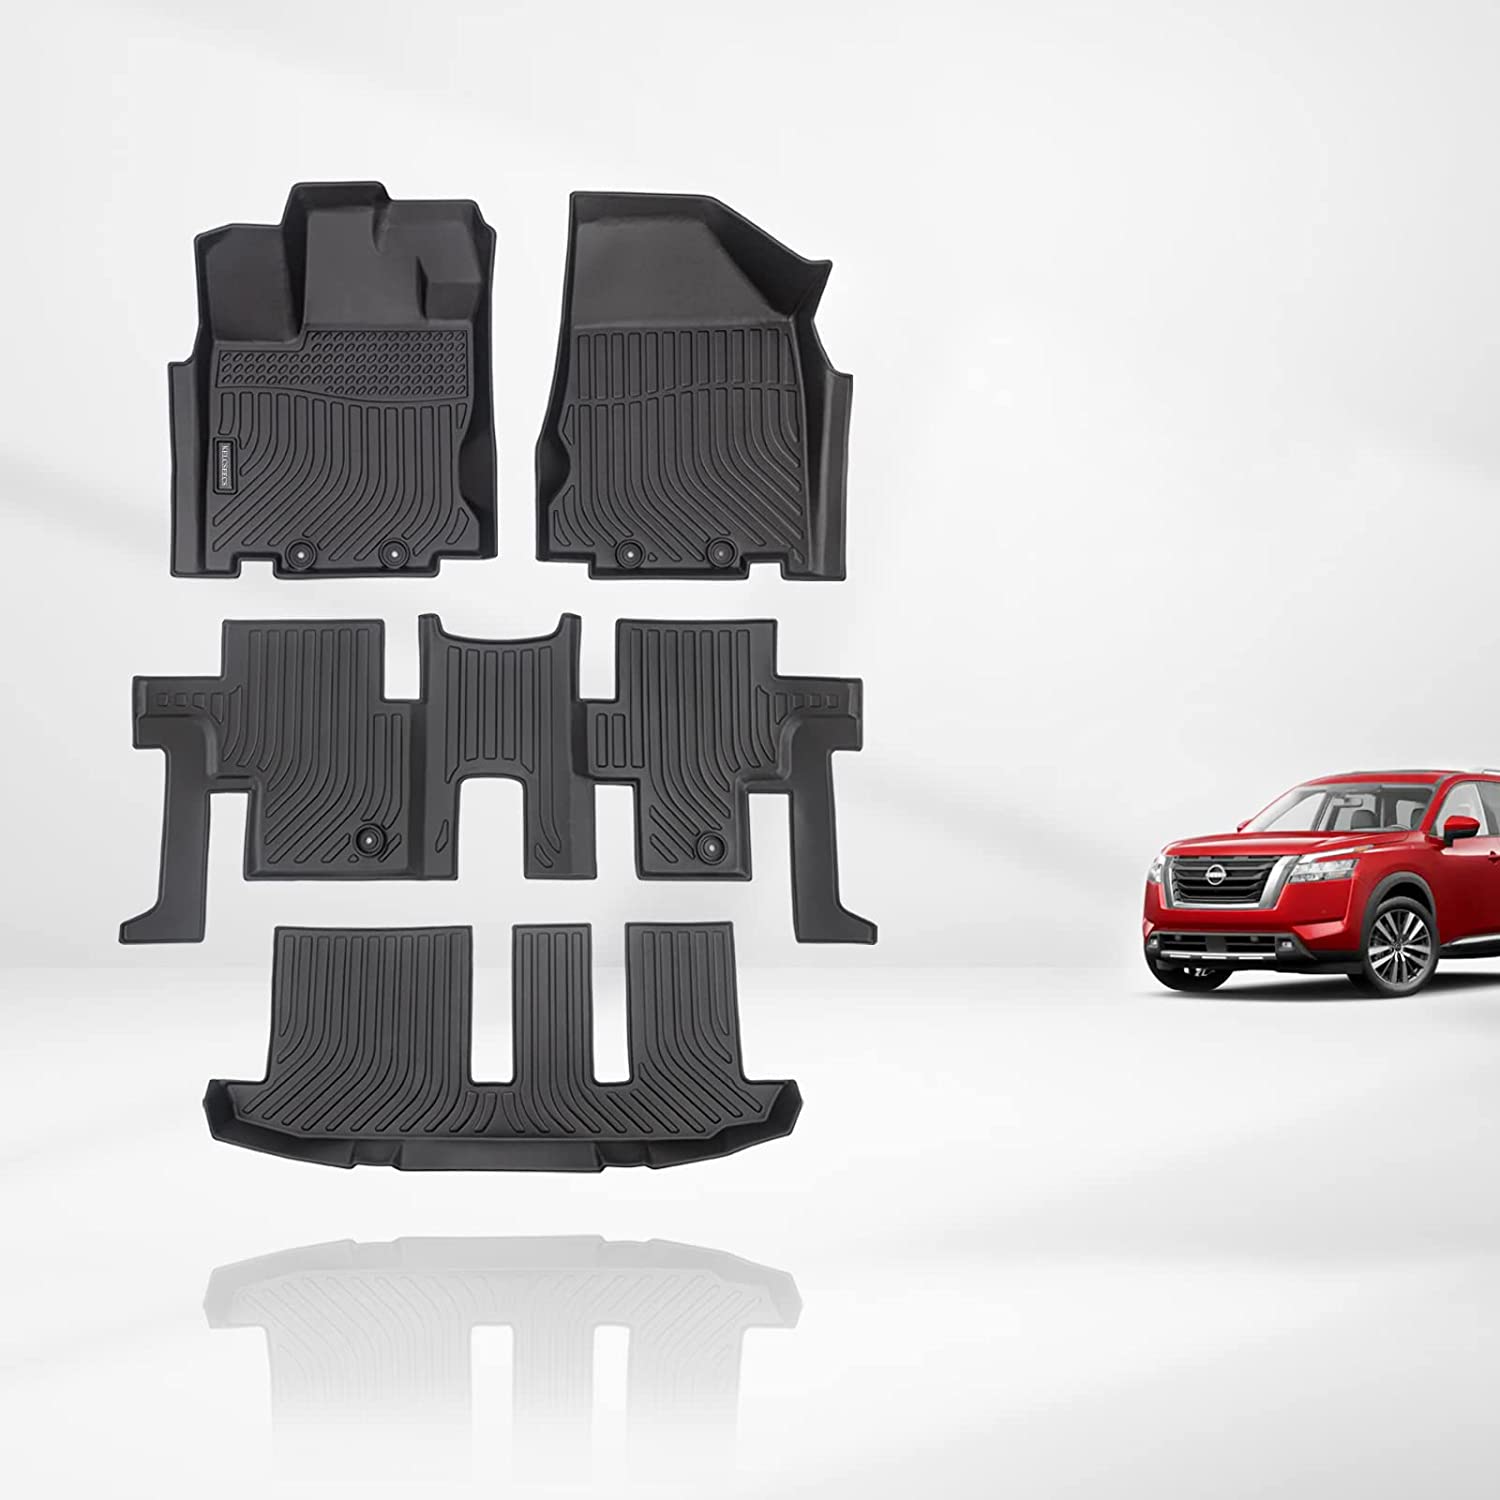 Kelcseecs All Weather 3D Tech Design TPE Car Floor Mats Floor Liners For Nissan Infiniti QX60 2014-2020